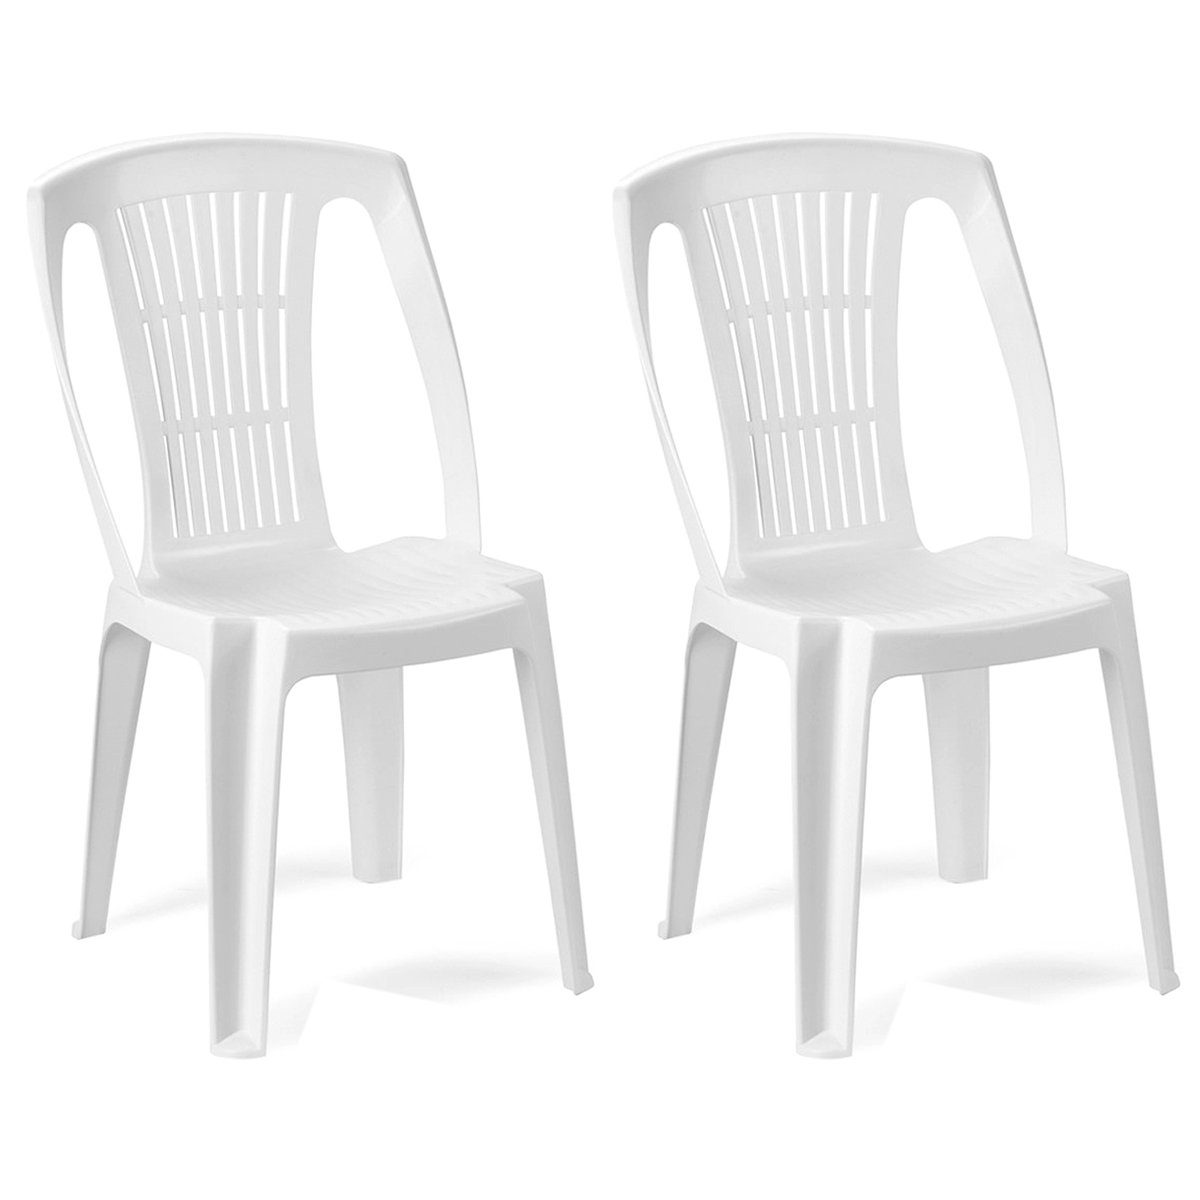 Mojawo Armlehnstuhl 2 Stück Stapelstuhl Kunststoff Weiß